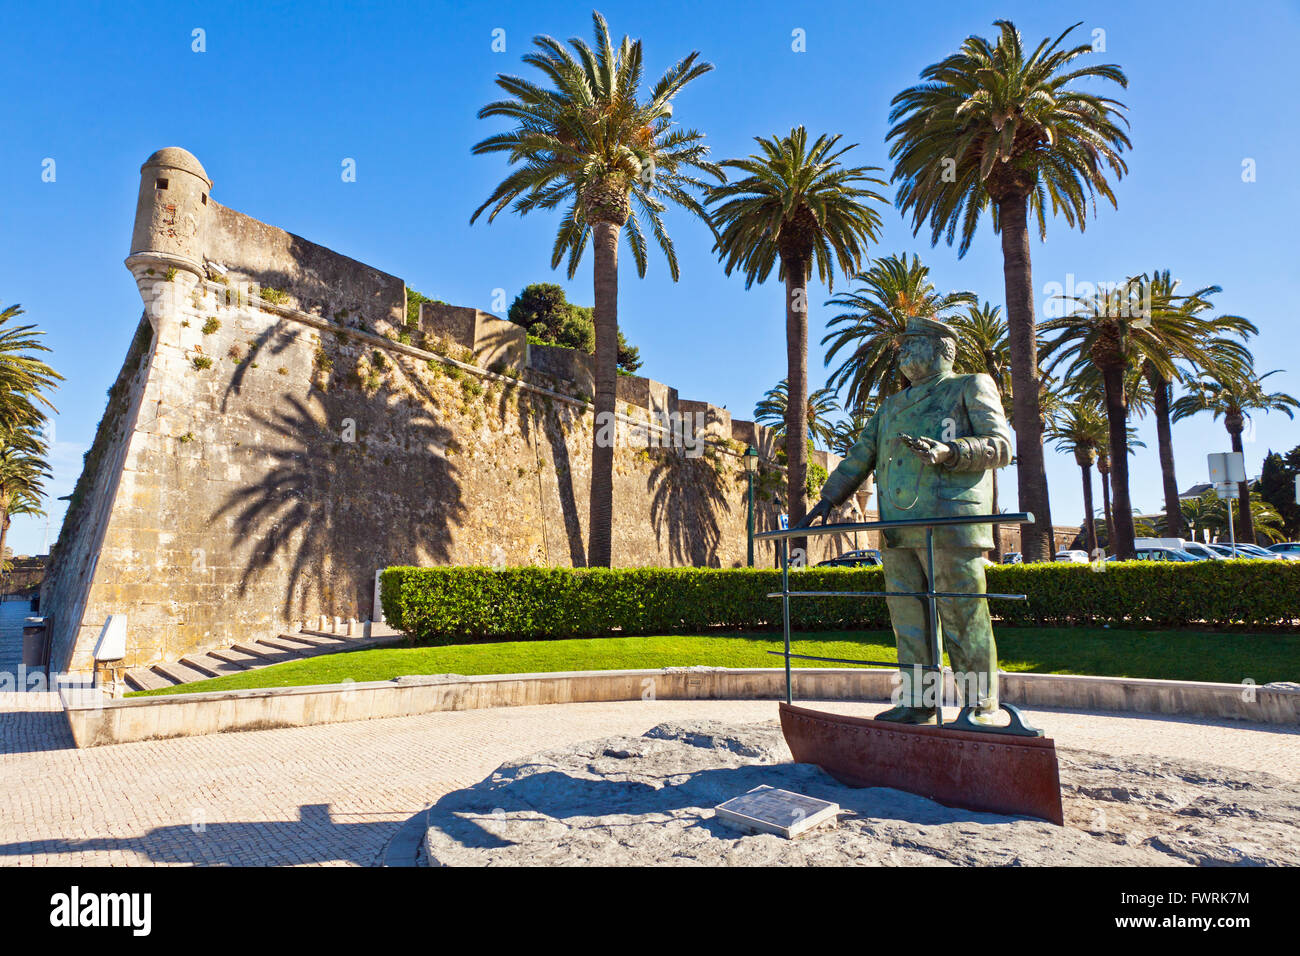 Statue von Dom Carlos i., König von Portugal, Stadt Cascais, Portugal Stockfoto